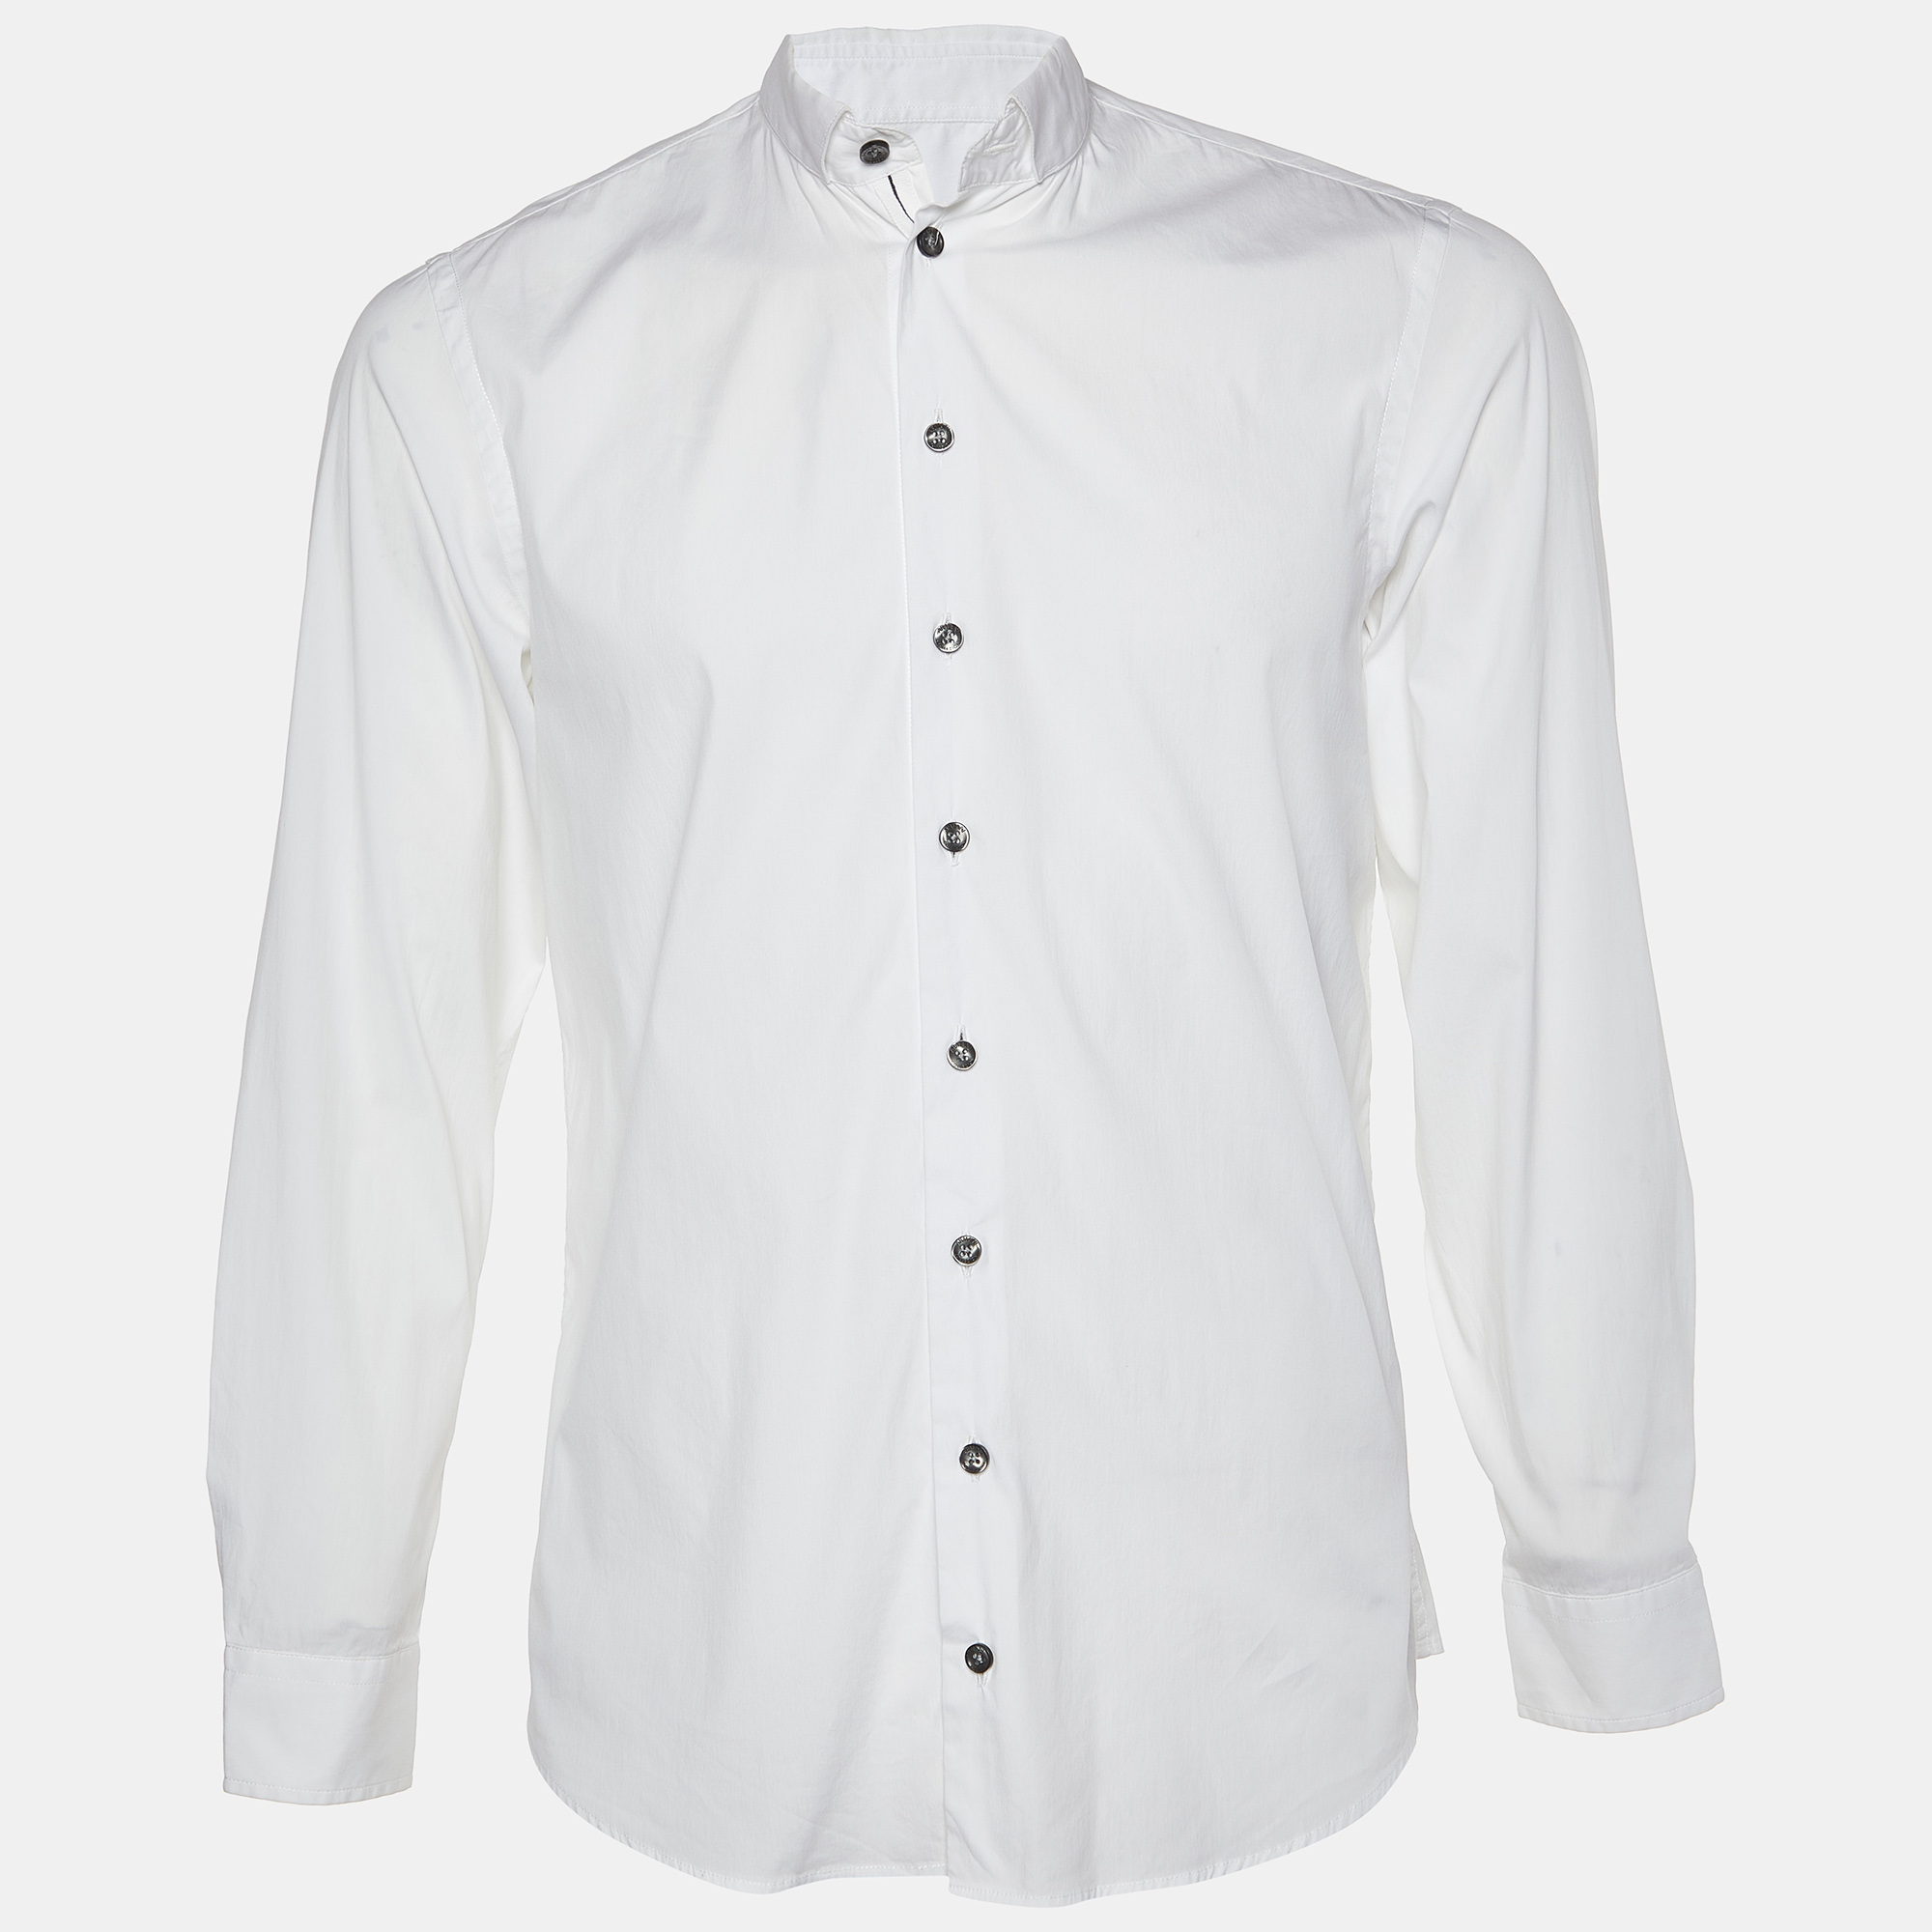 Armani collezioni white cotton long sleeve shirt m